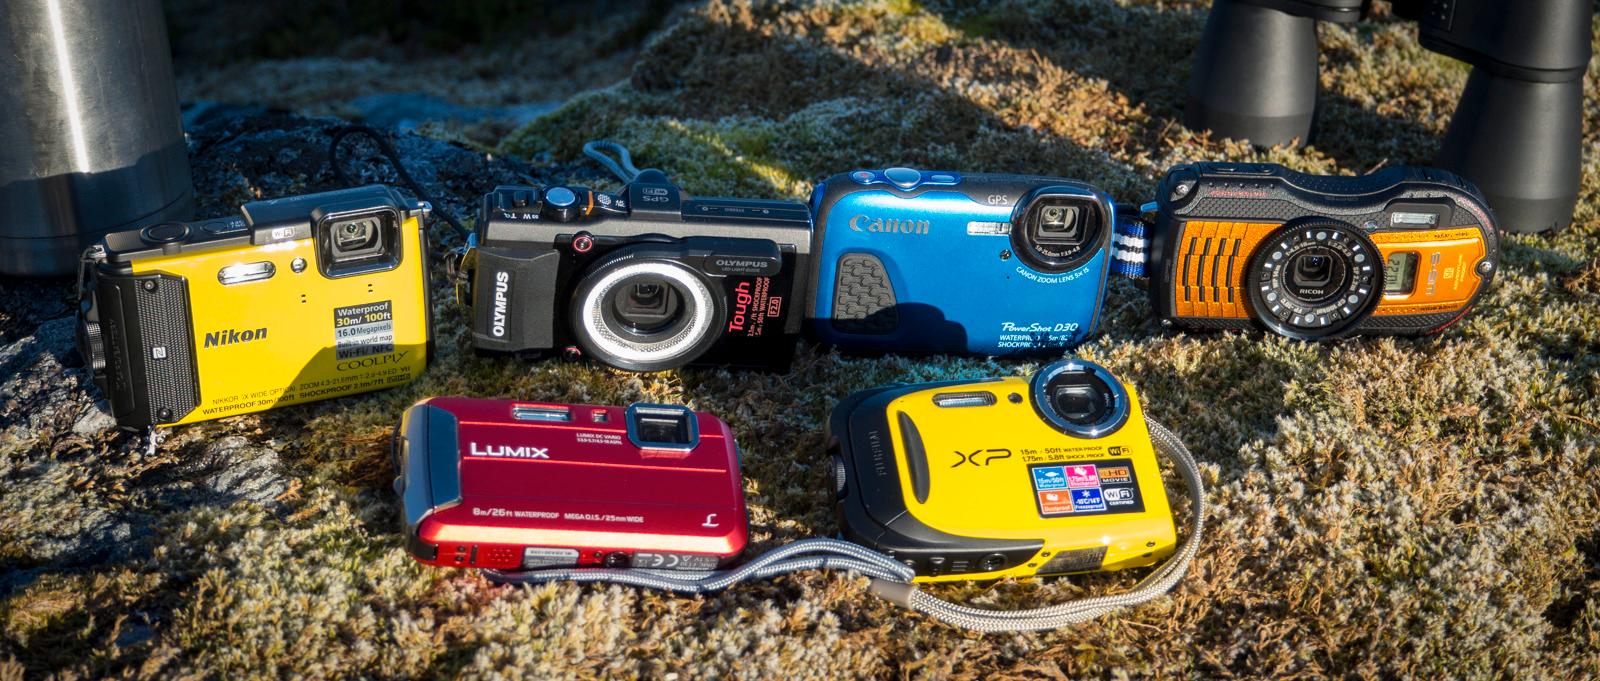 Bak fra venstre: Nikon Coolpix AW130, Olympus Tough TG-4, Canon PowerShot D30 og Ricoh WG-5 GPS. Foran, fra venstre: Panasonic Lumix DMC-TS30, Fujifilm FinePix XP80. Foto: Kristoffer Møllevik